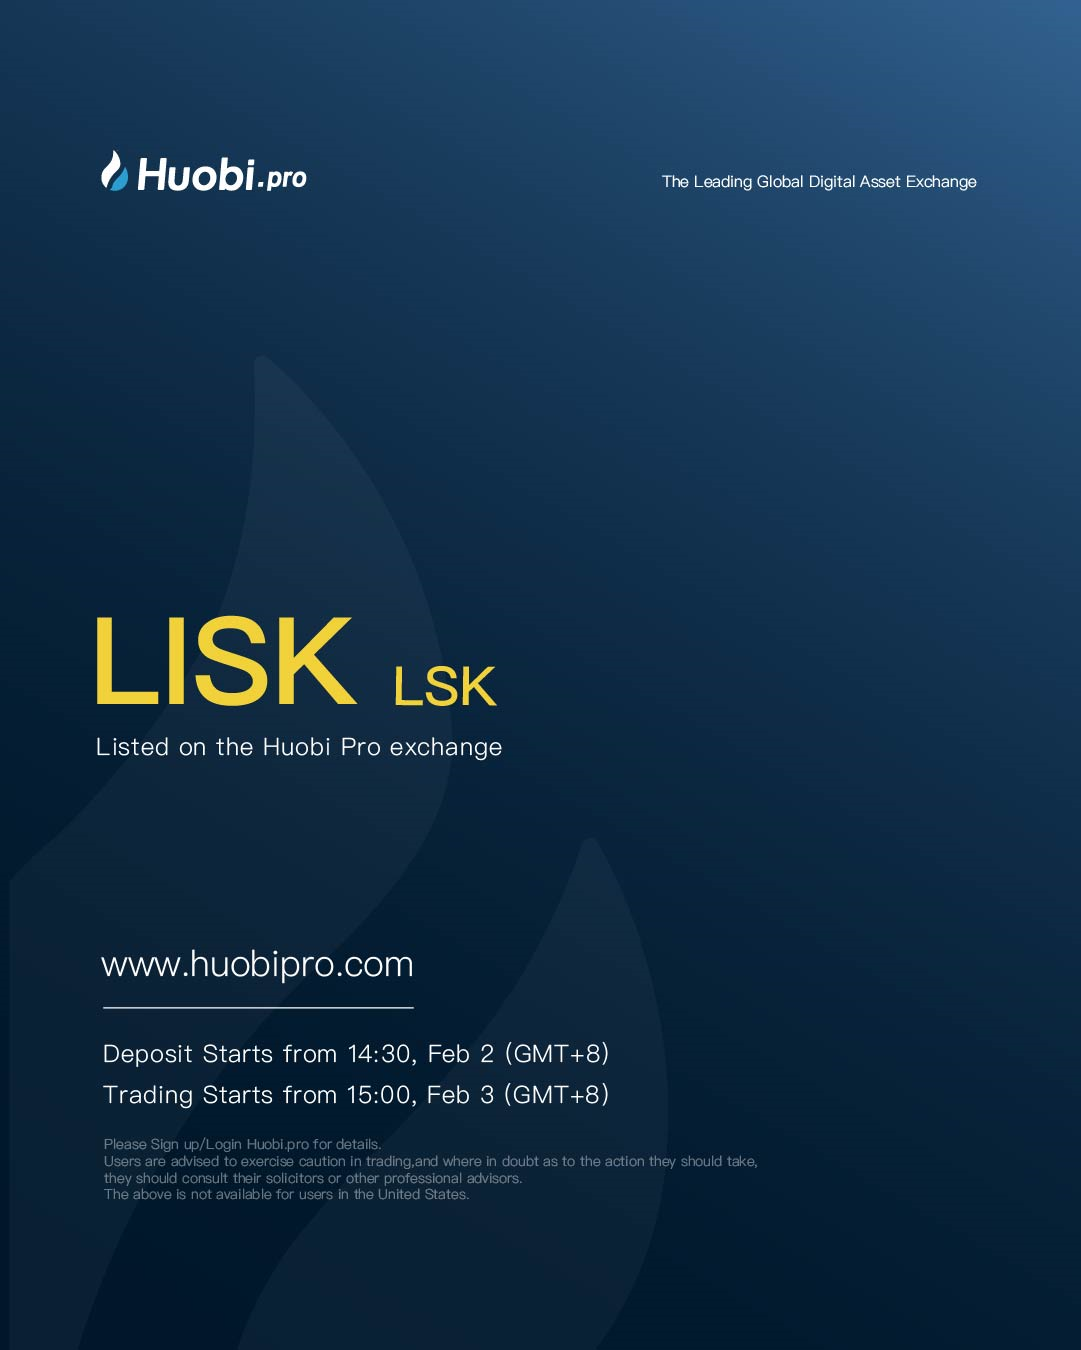 Huobi Pro Launches LISK(LSK) on 2 February 2018 (GMT+8)